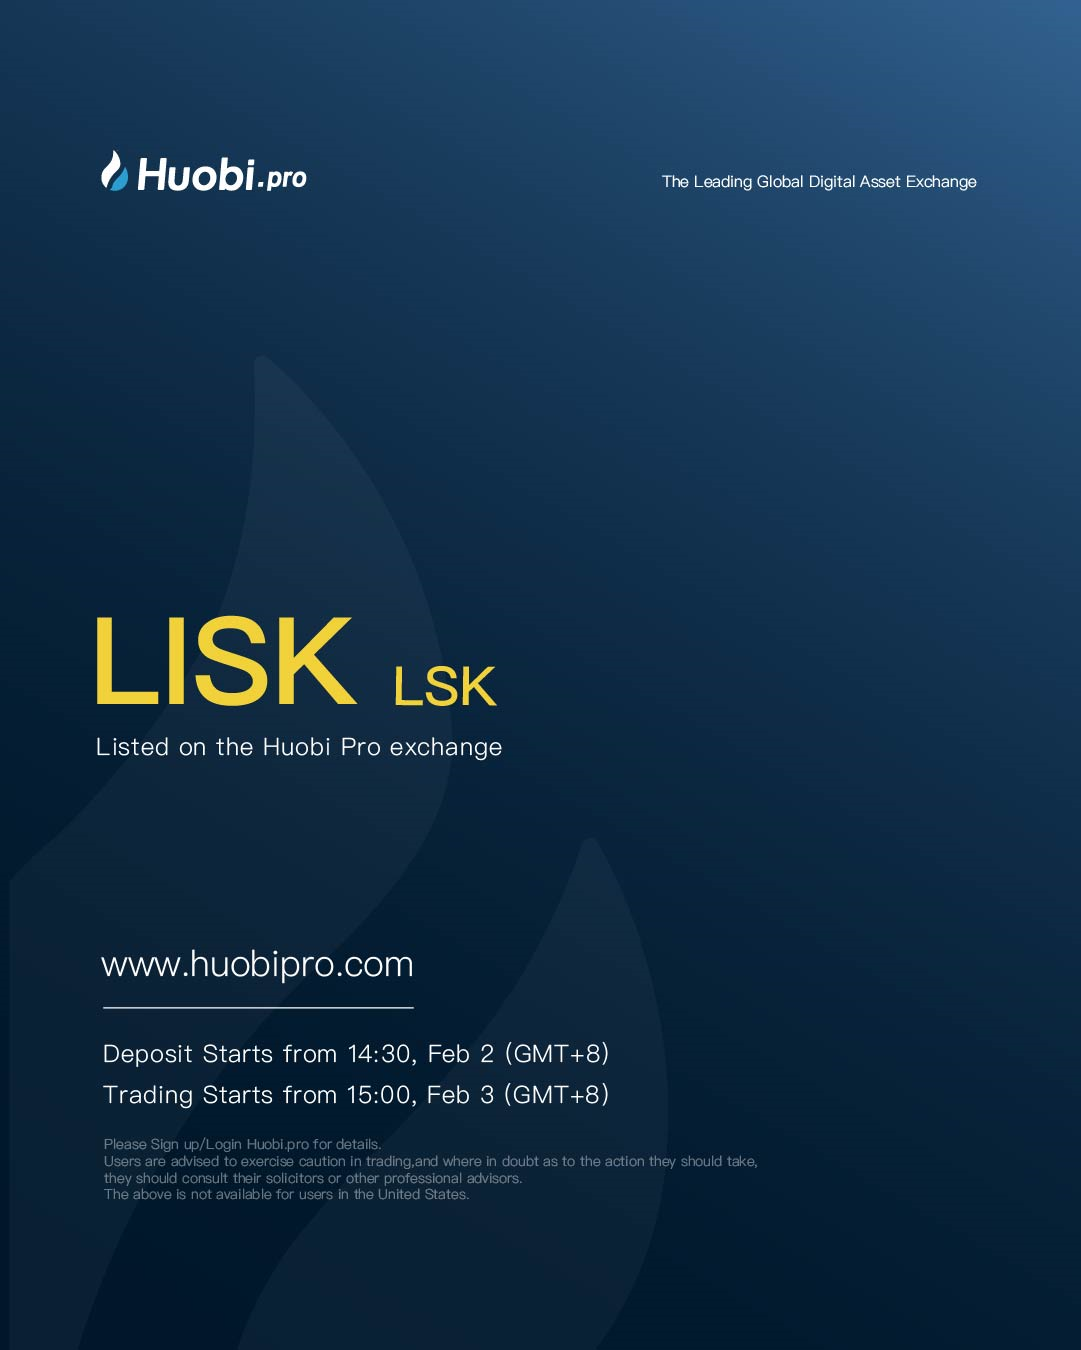 Huobi Pro Launches LISK(LSK) on 2 February 2018 (GMT+8)